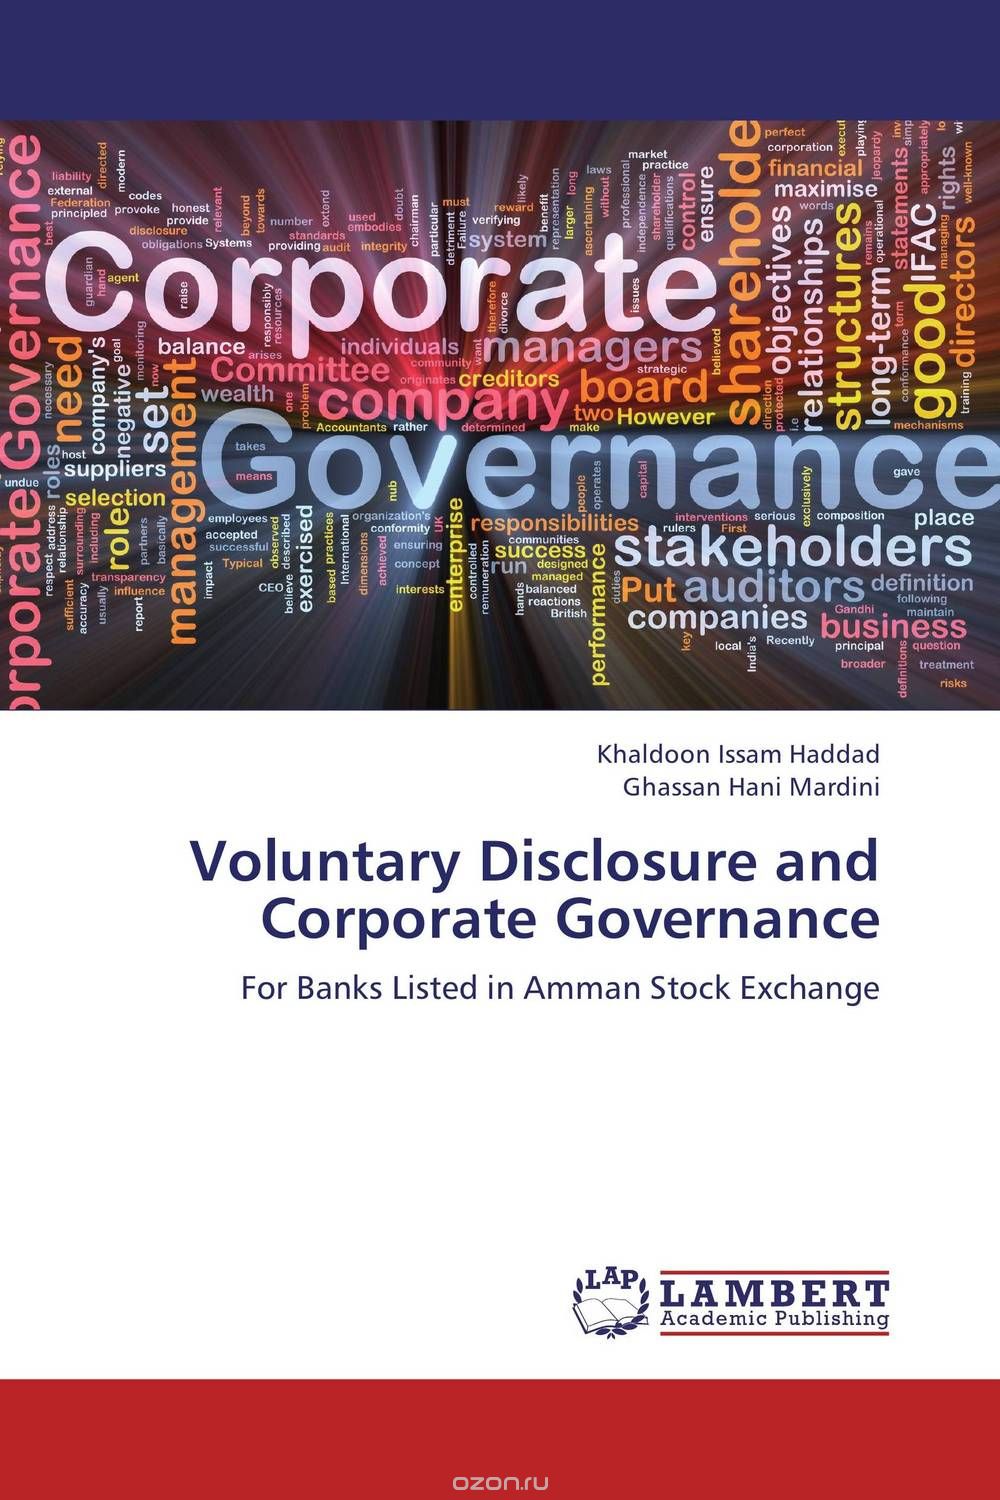 Скачать книгу "Voluntary Disclosure and Corporate Governance"